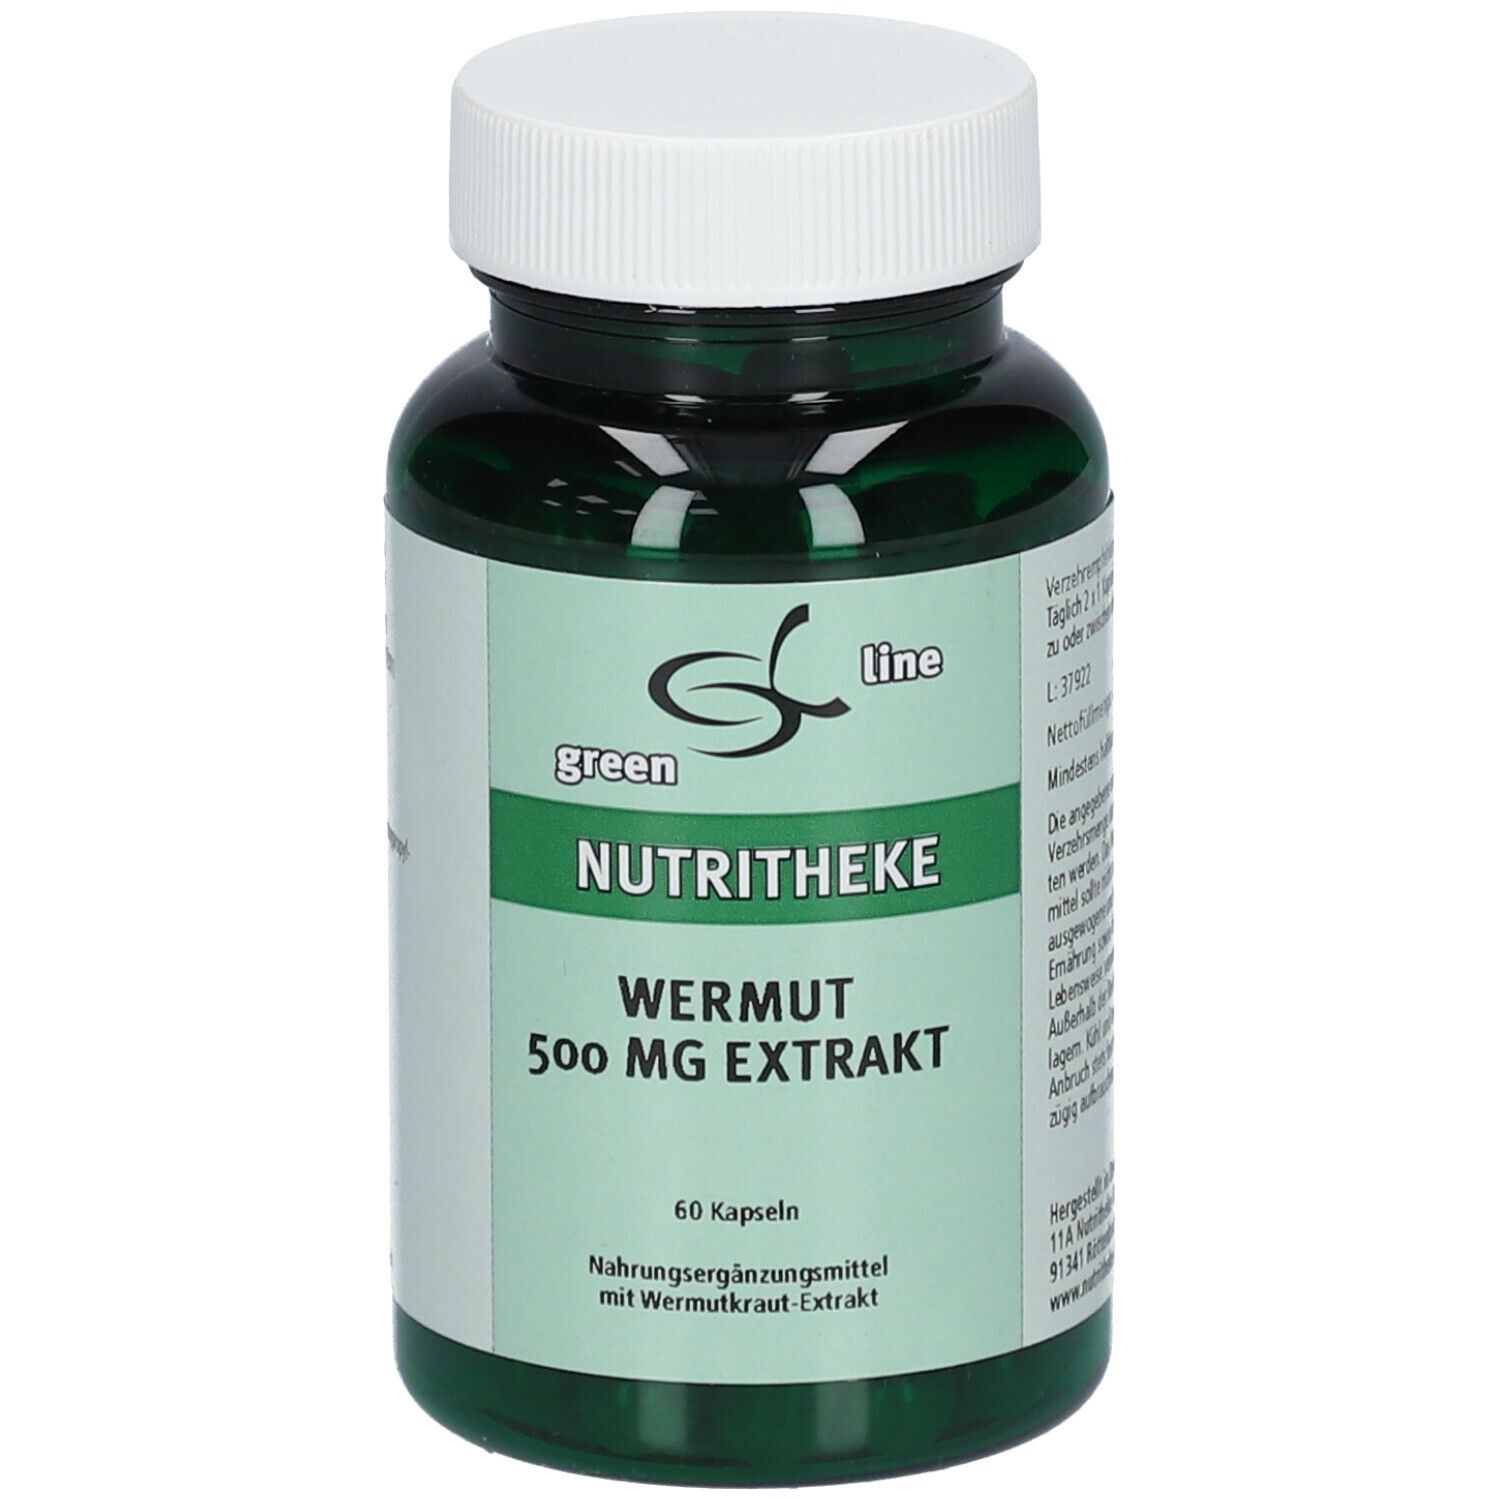 Image of green line WERMUT 500 mg Extrakt